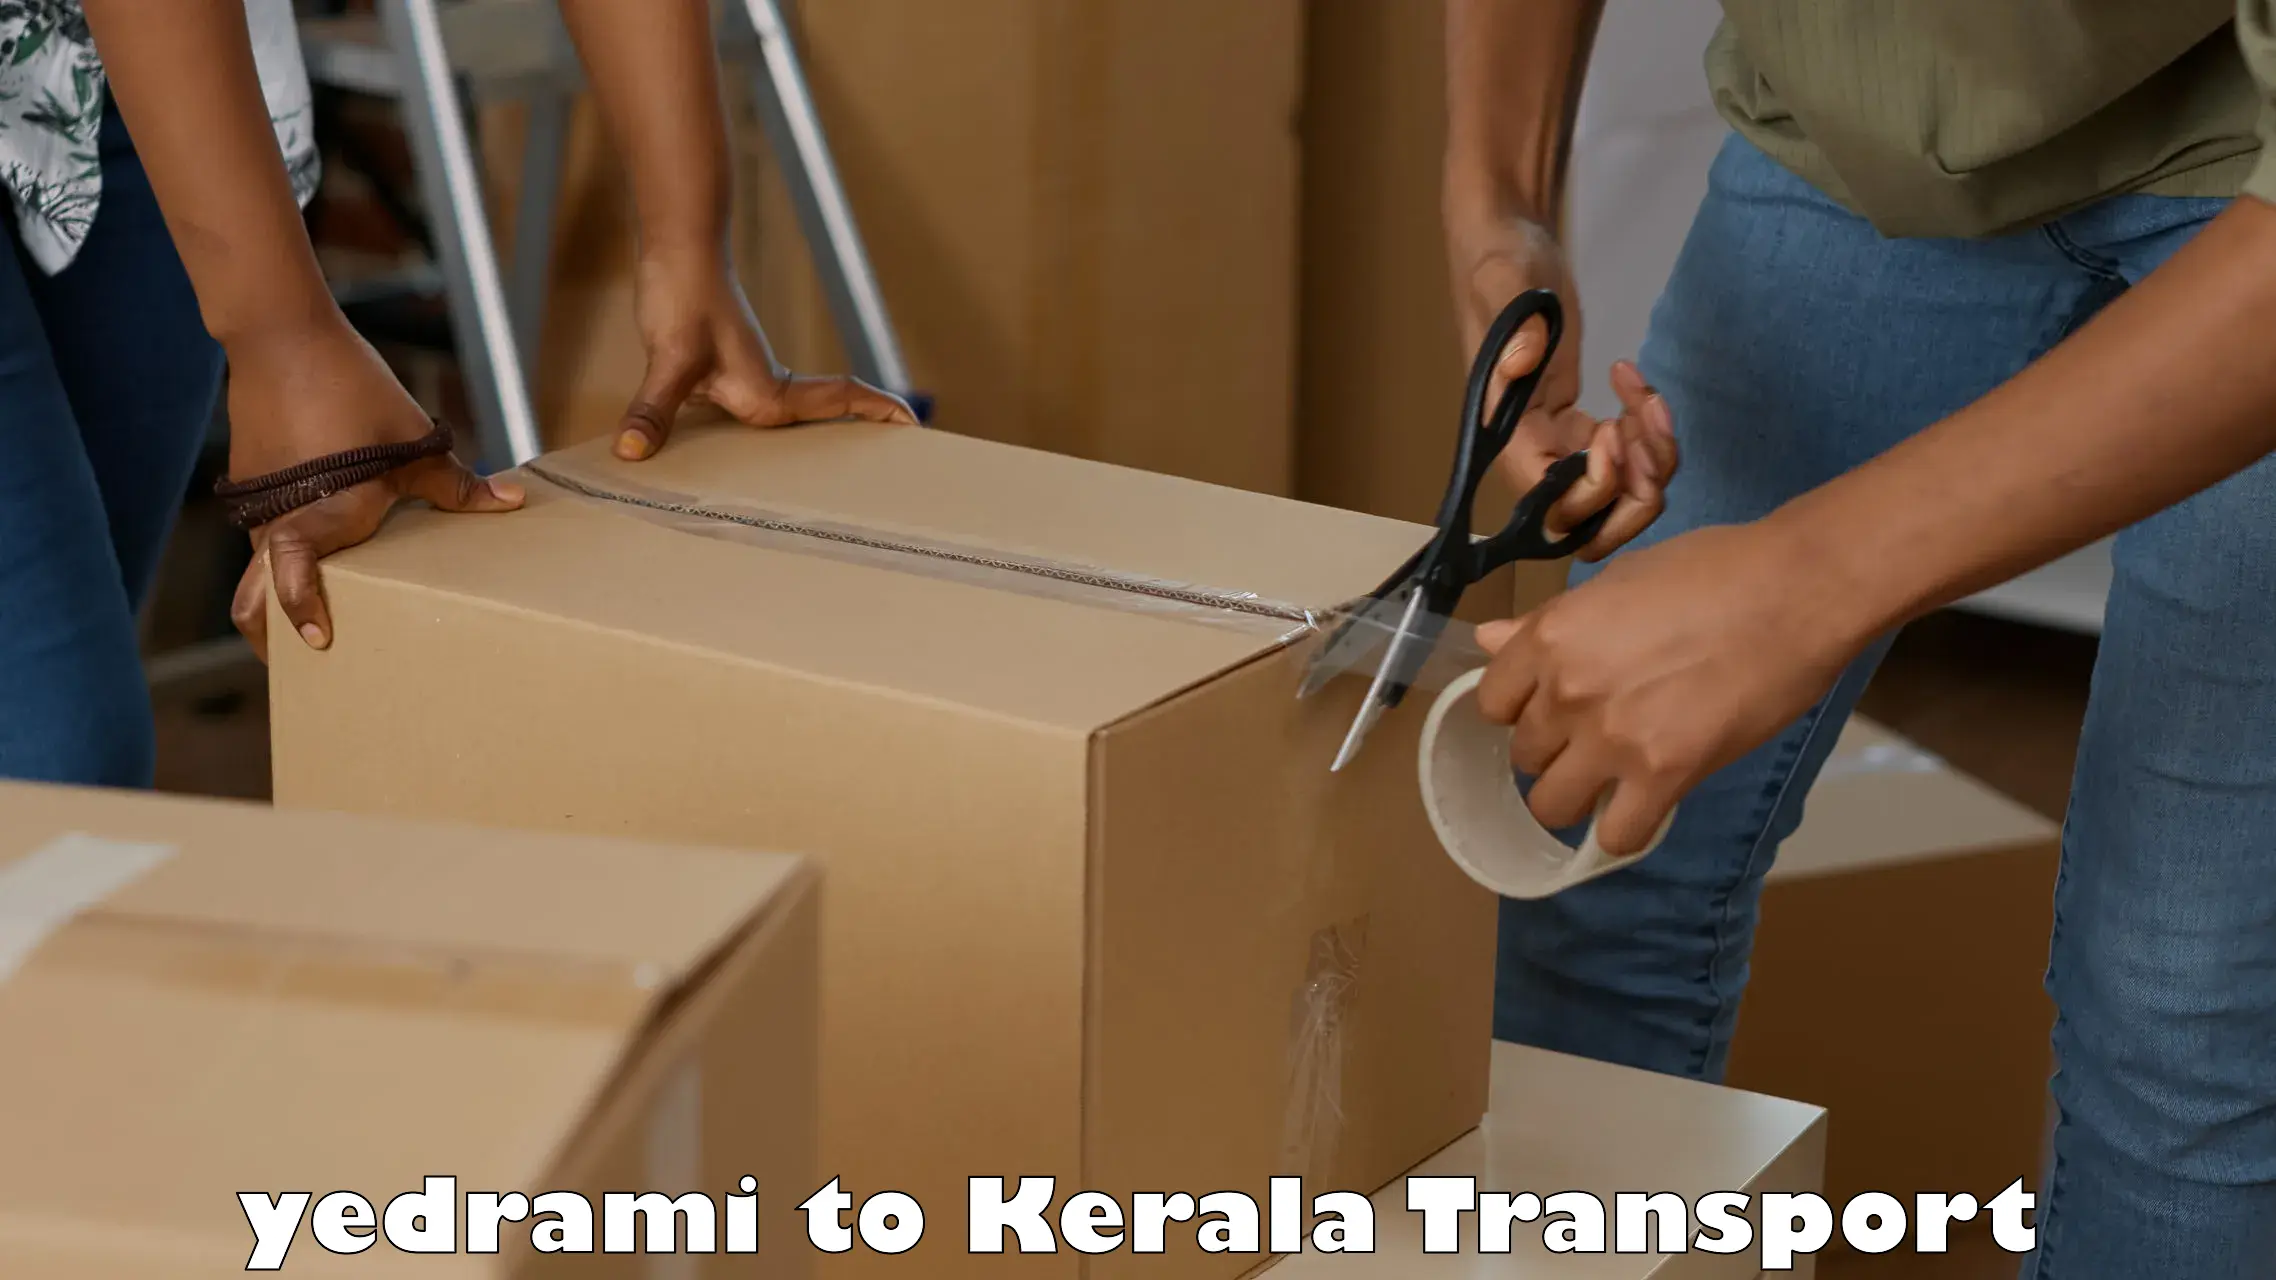 Online transport service yedrami to Kottayam